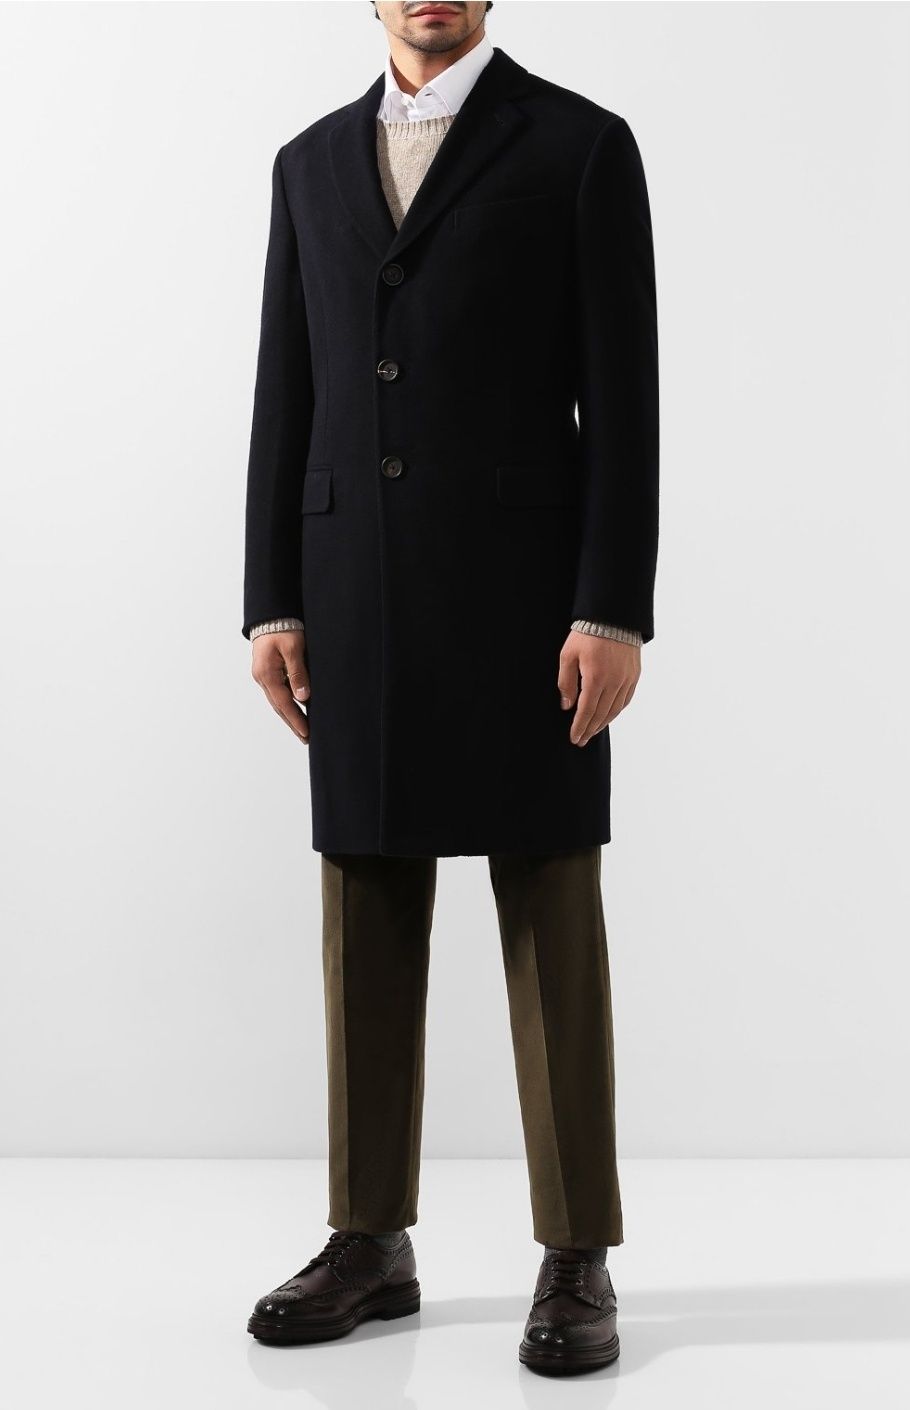 PAL ZILERI LAB ITALY 52 размер брендовое пальто премиум класса